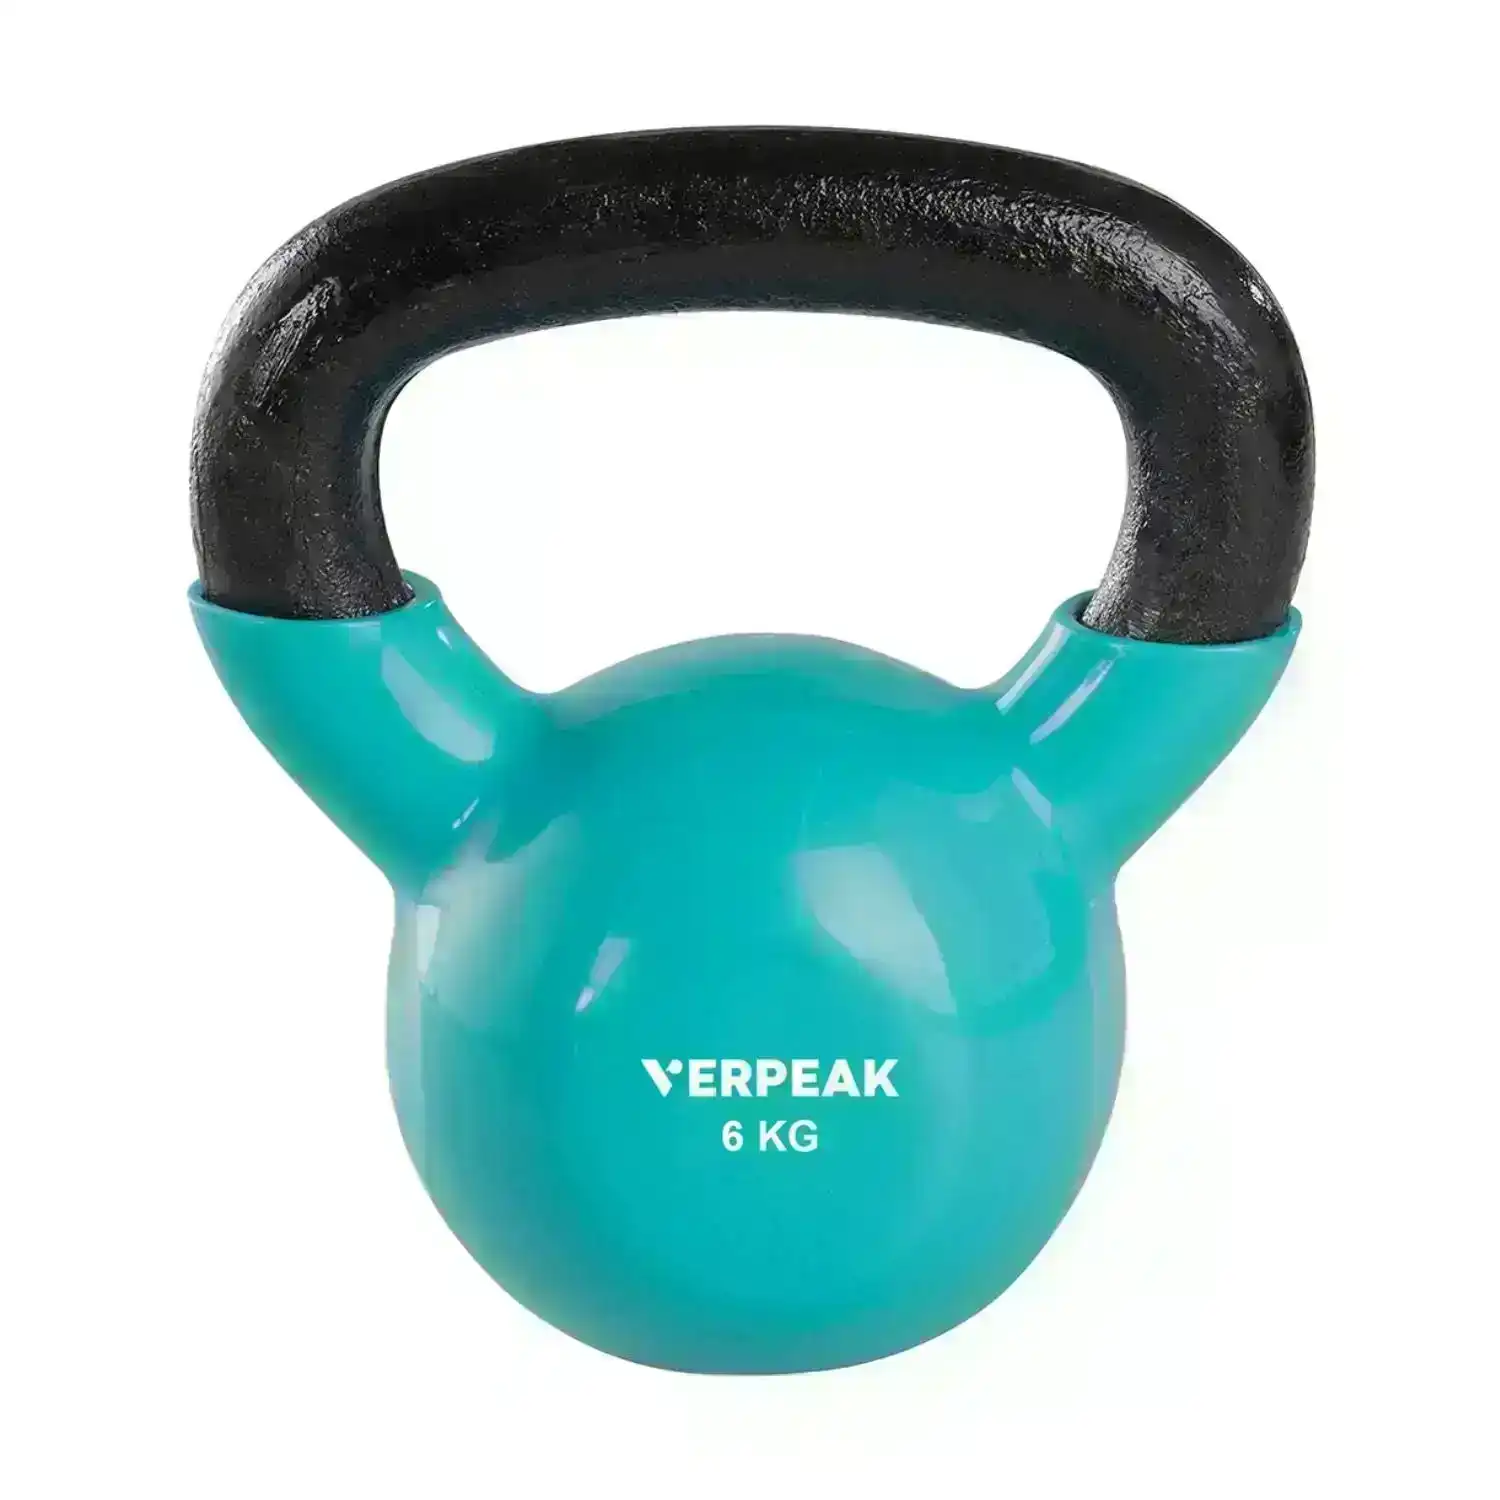 Verpeak Kettlebell 6kg Cast Iron Vinyl Coated Bodybuilding Fitness Home Workout